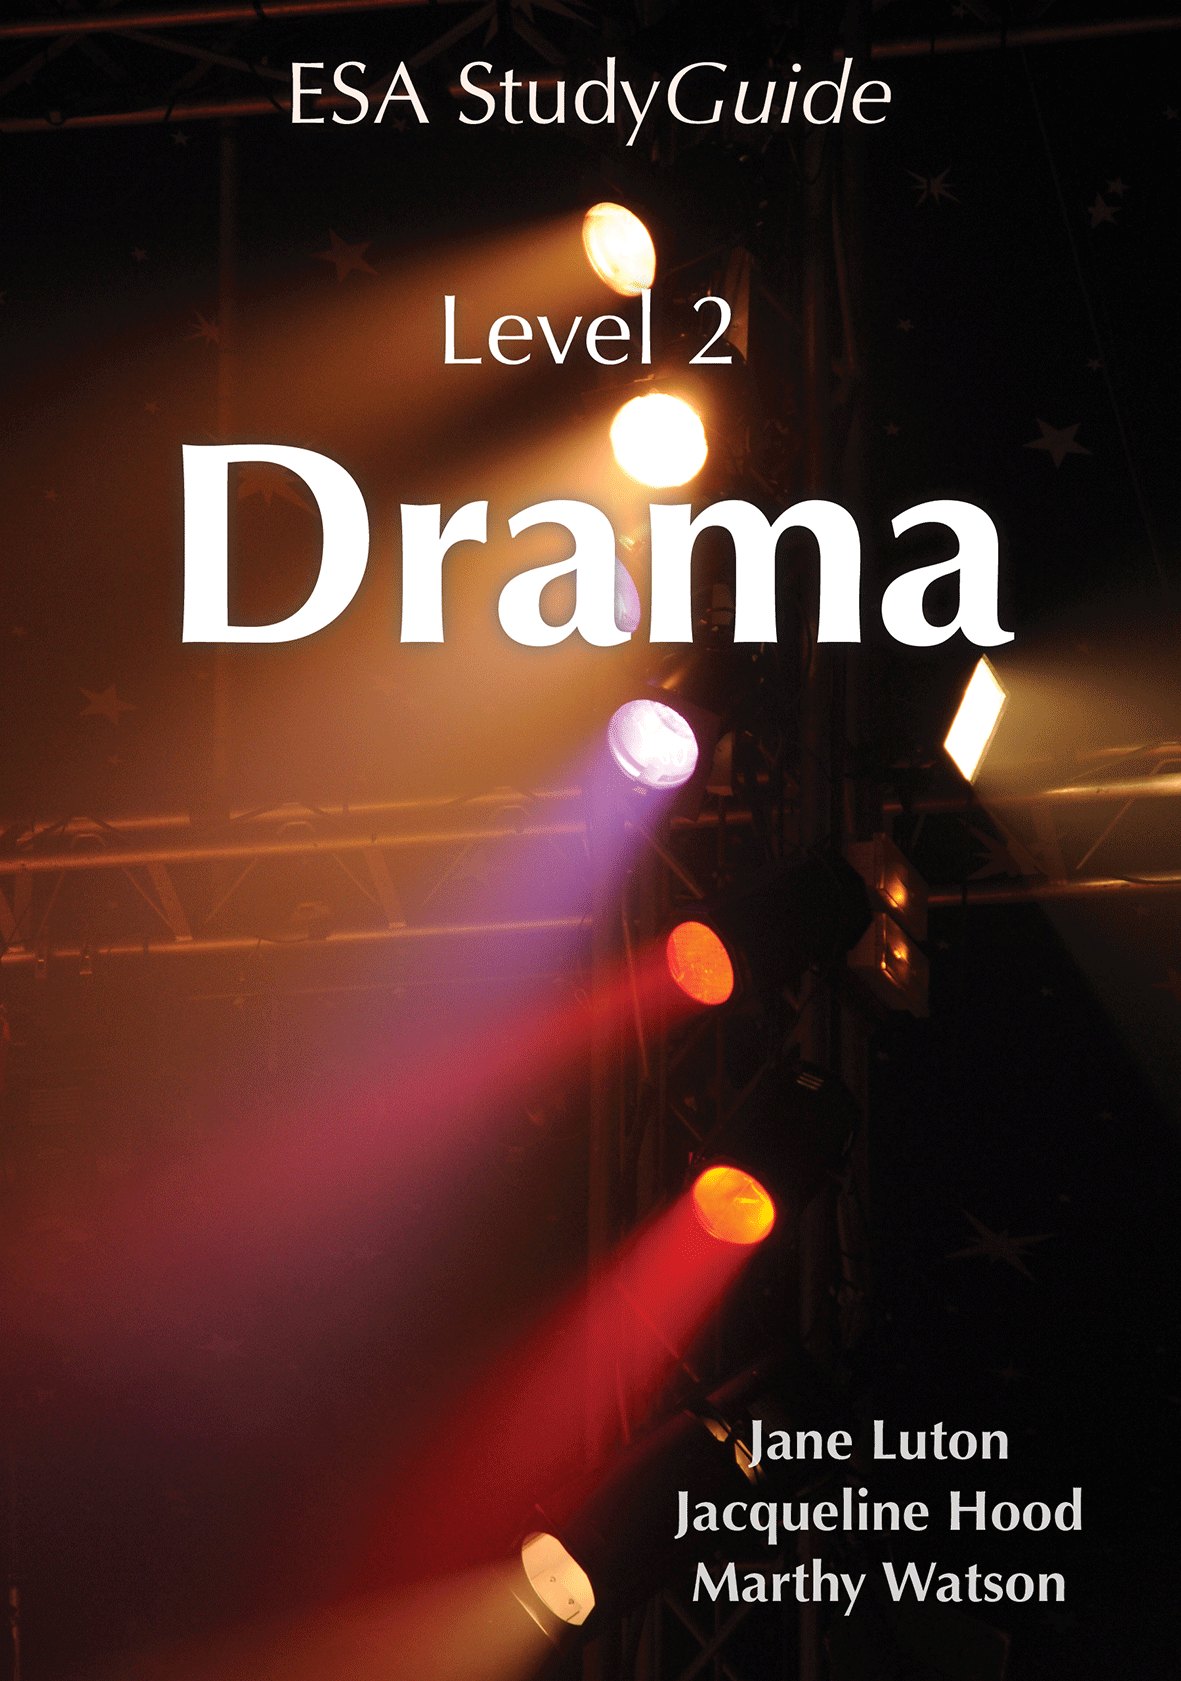 Level 2 Drama ESA Study Guide